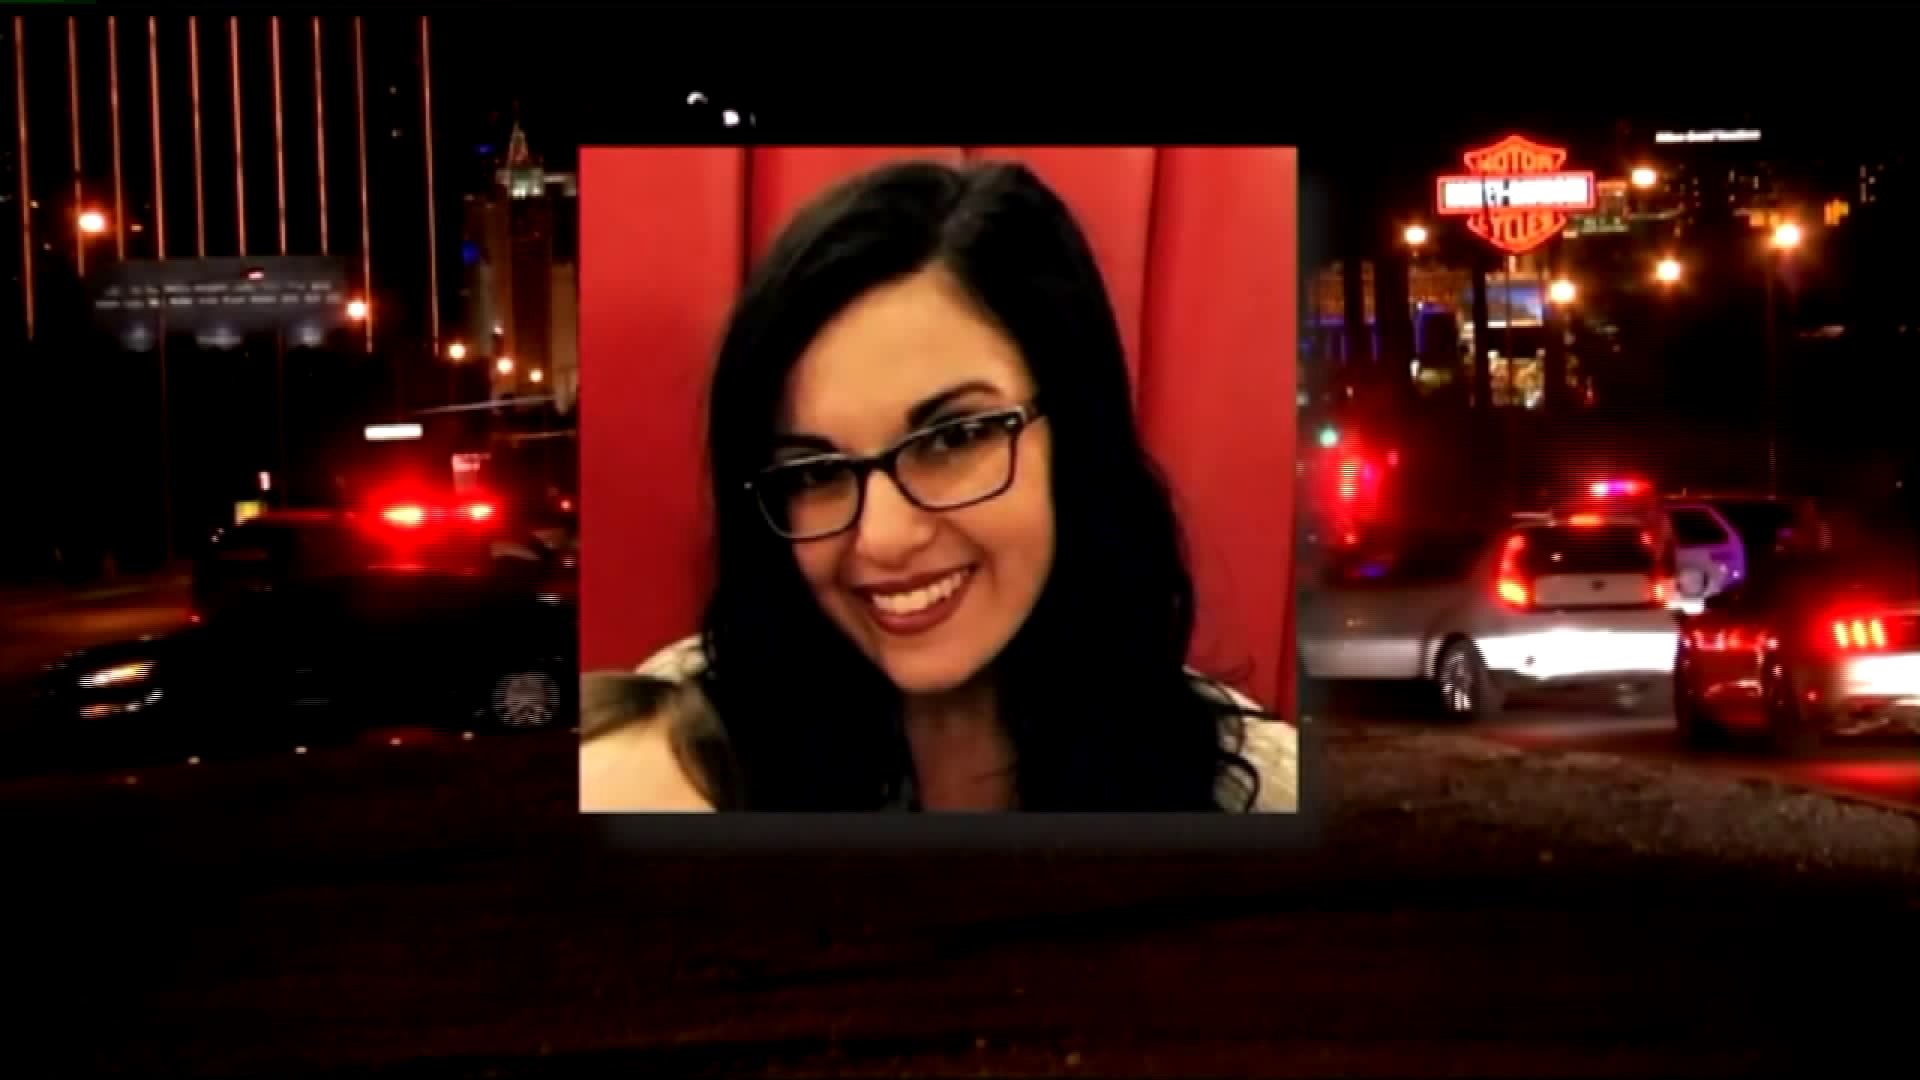 Woman from Wayne County Survives Las Vegas Massacre